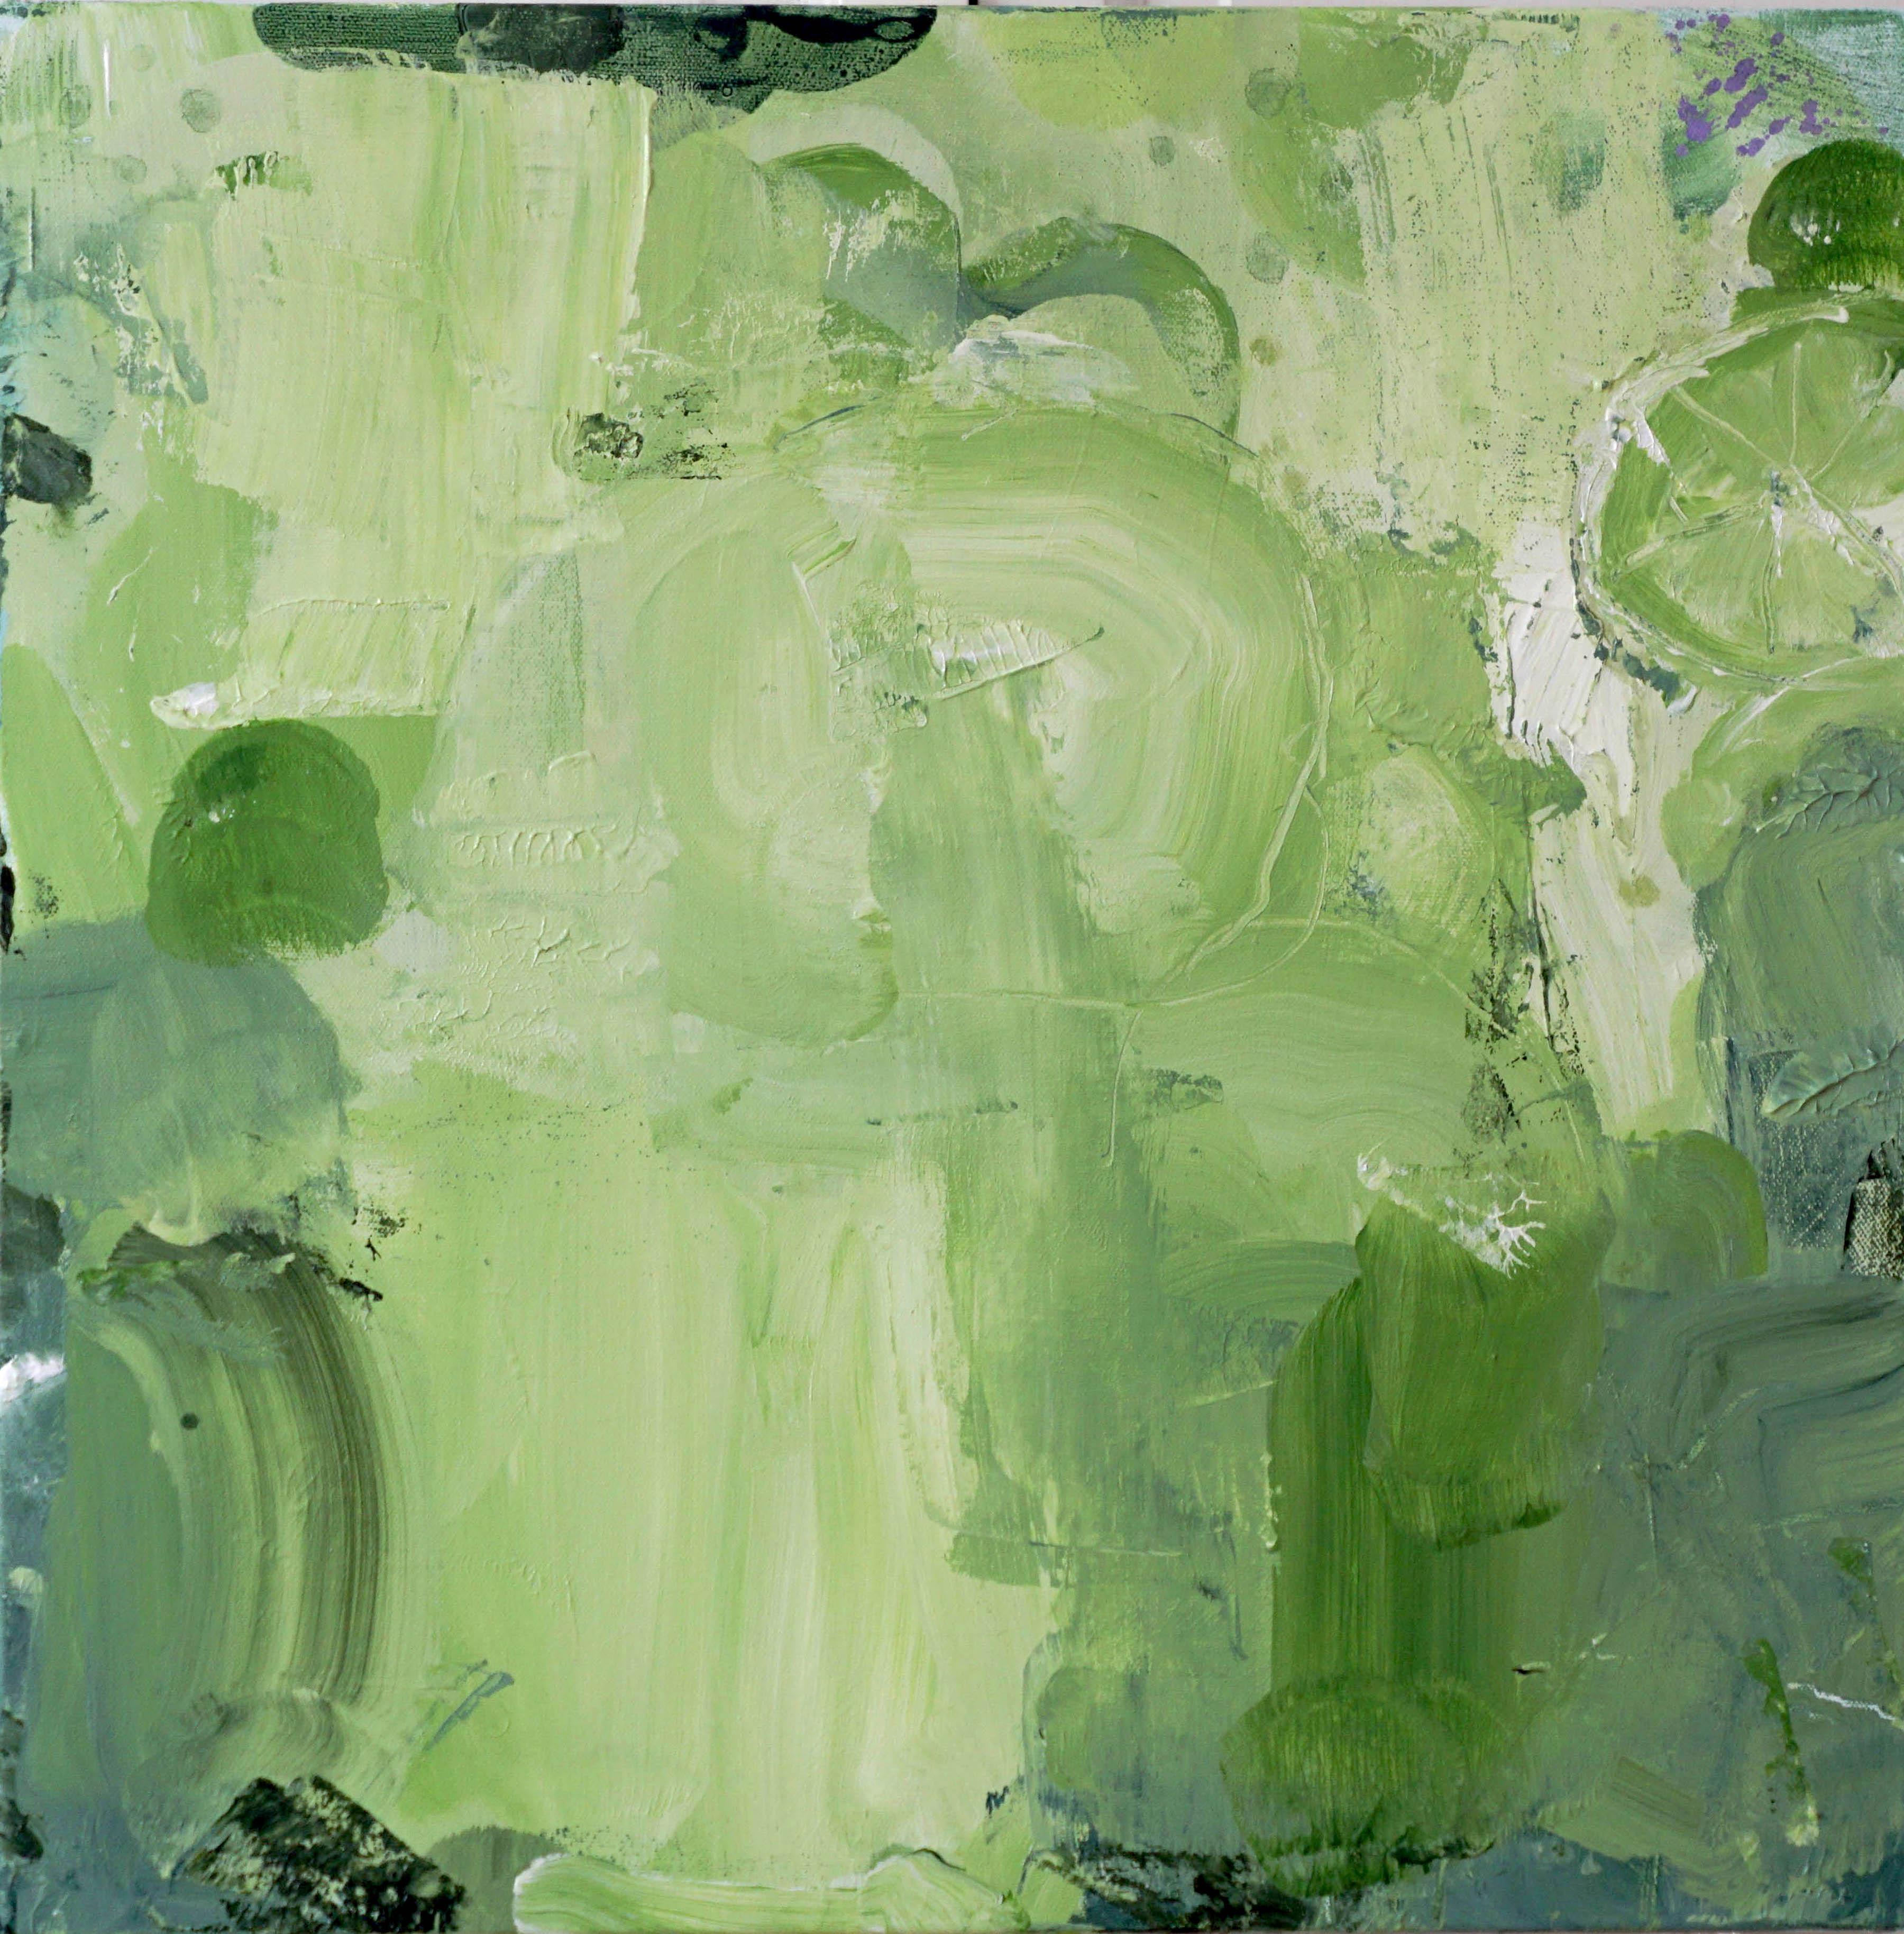 Abstract Painting Lisa Fellerson - Bahia, peinture expressionniste abstraite vert chamois, larges coups de pinceau